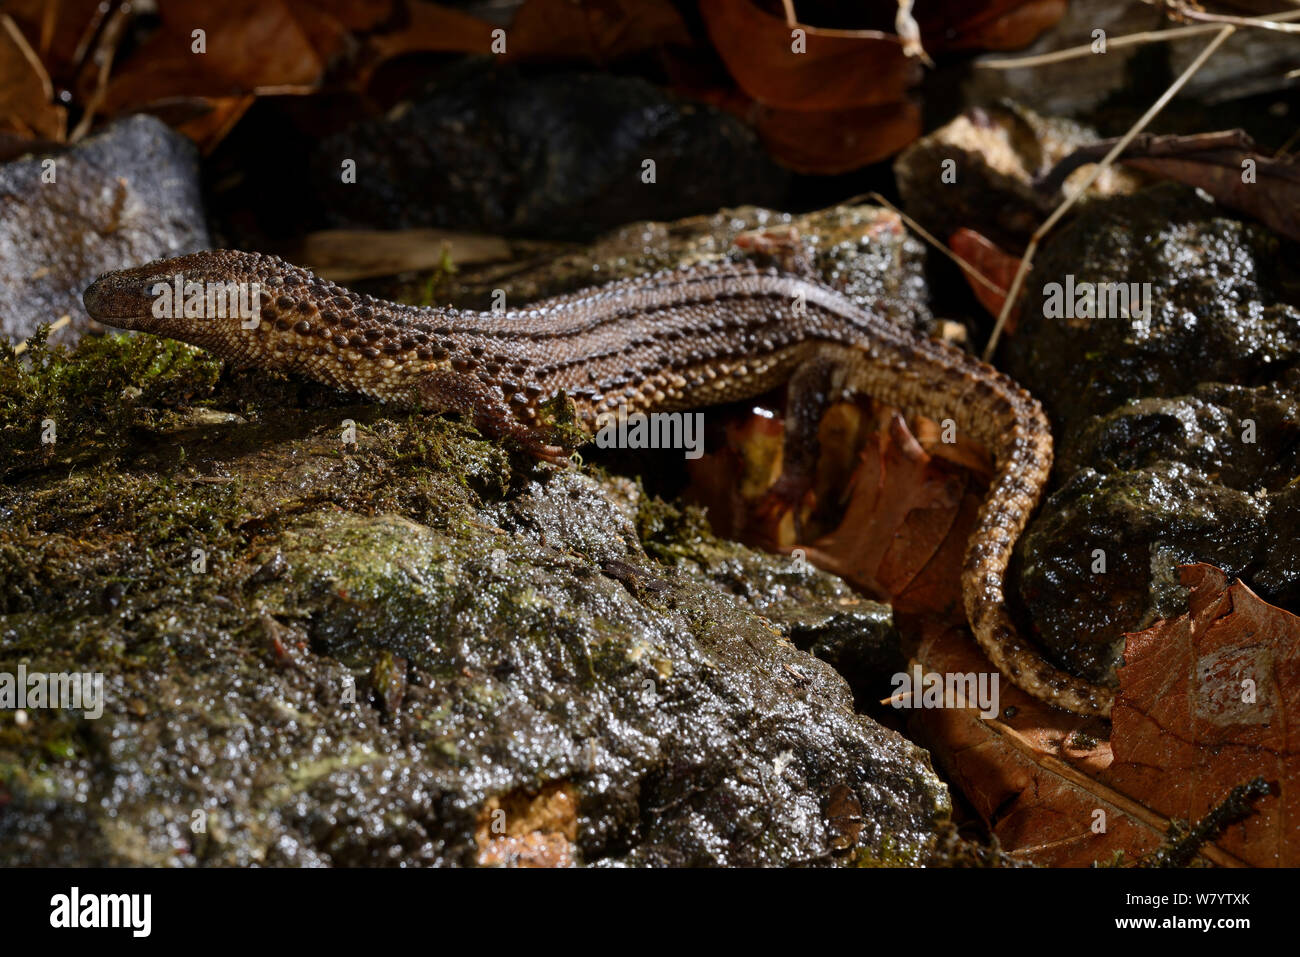 Earless monitor lizard (Lanthanotus borneensis) venomous species, captive from Borneo. Stock Photo